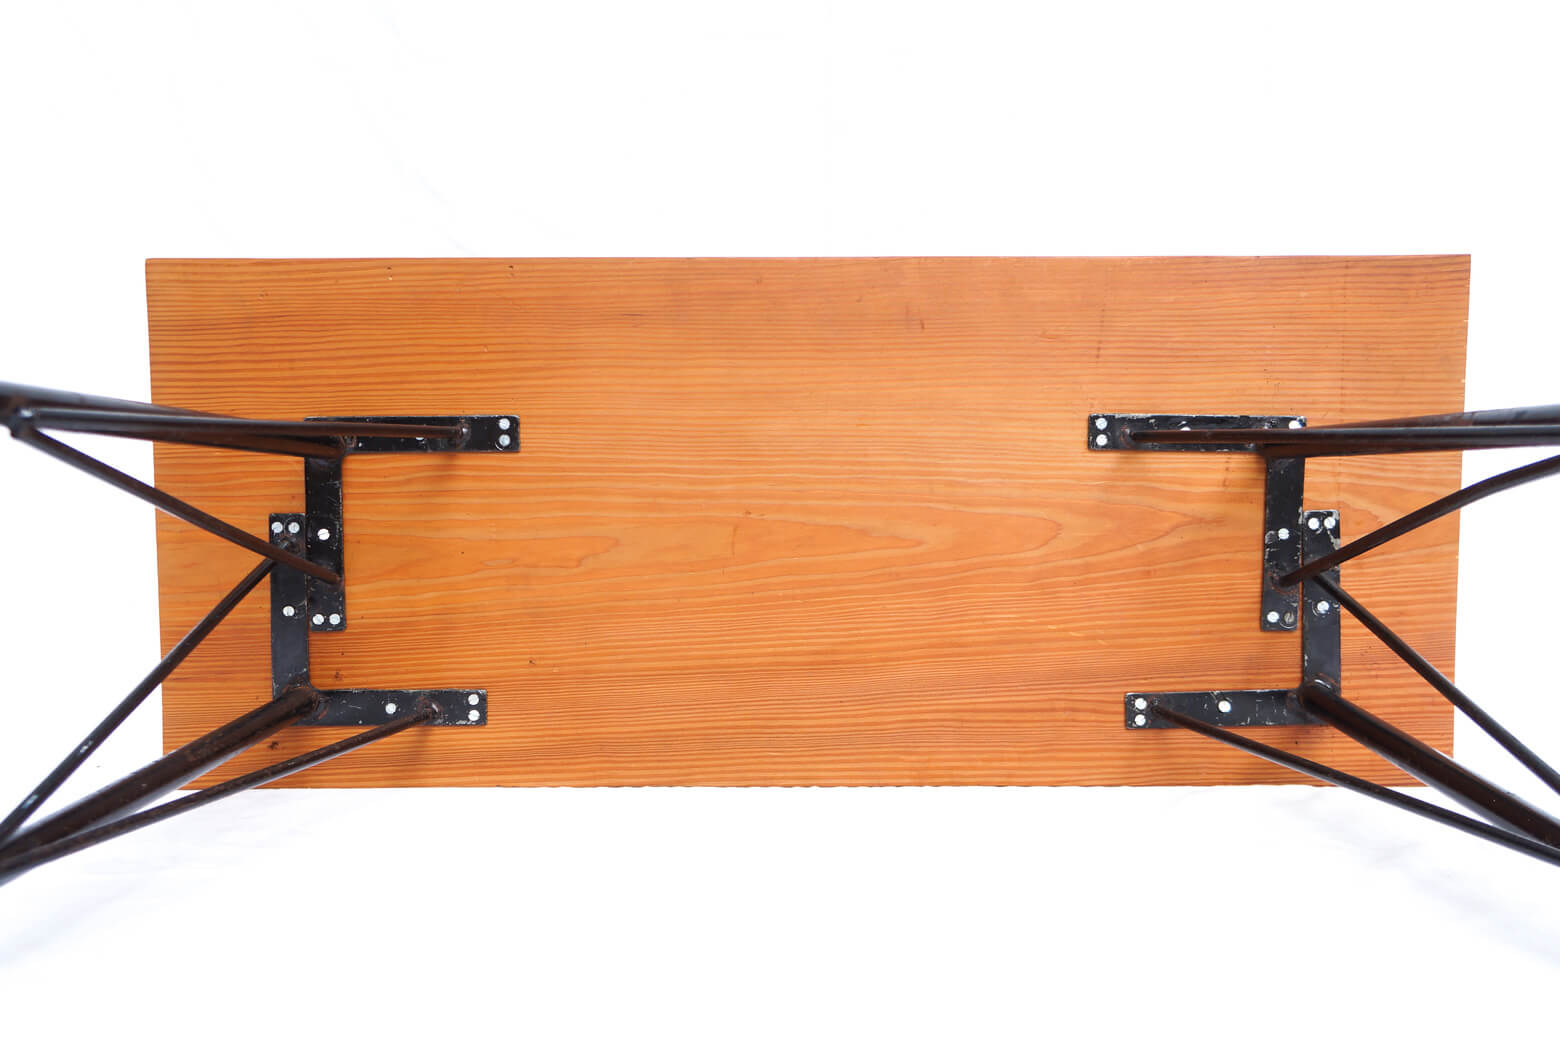 Solid wood Remake Table/無垢 一枚板 アイアンレッグテーブル 鉄脚 アンティーク インダストリアル ①